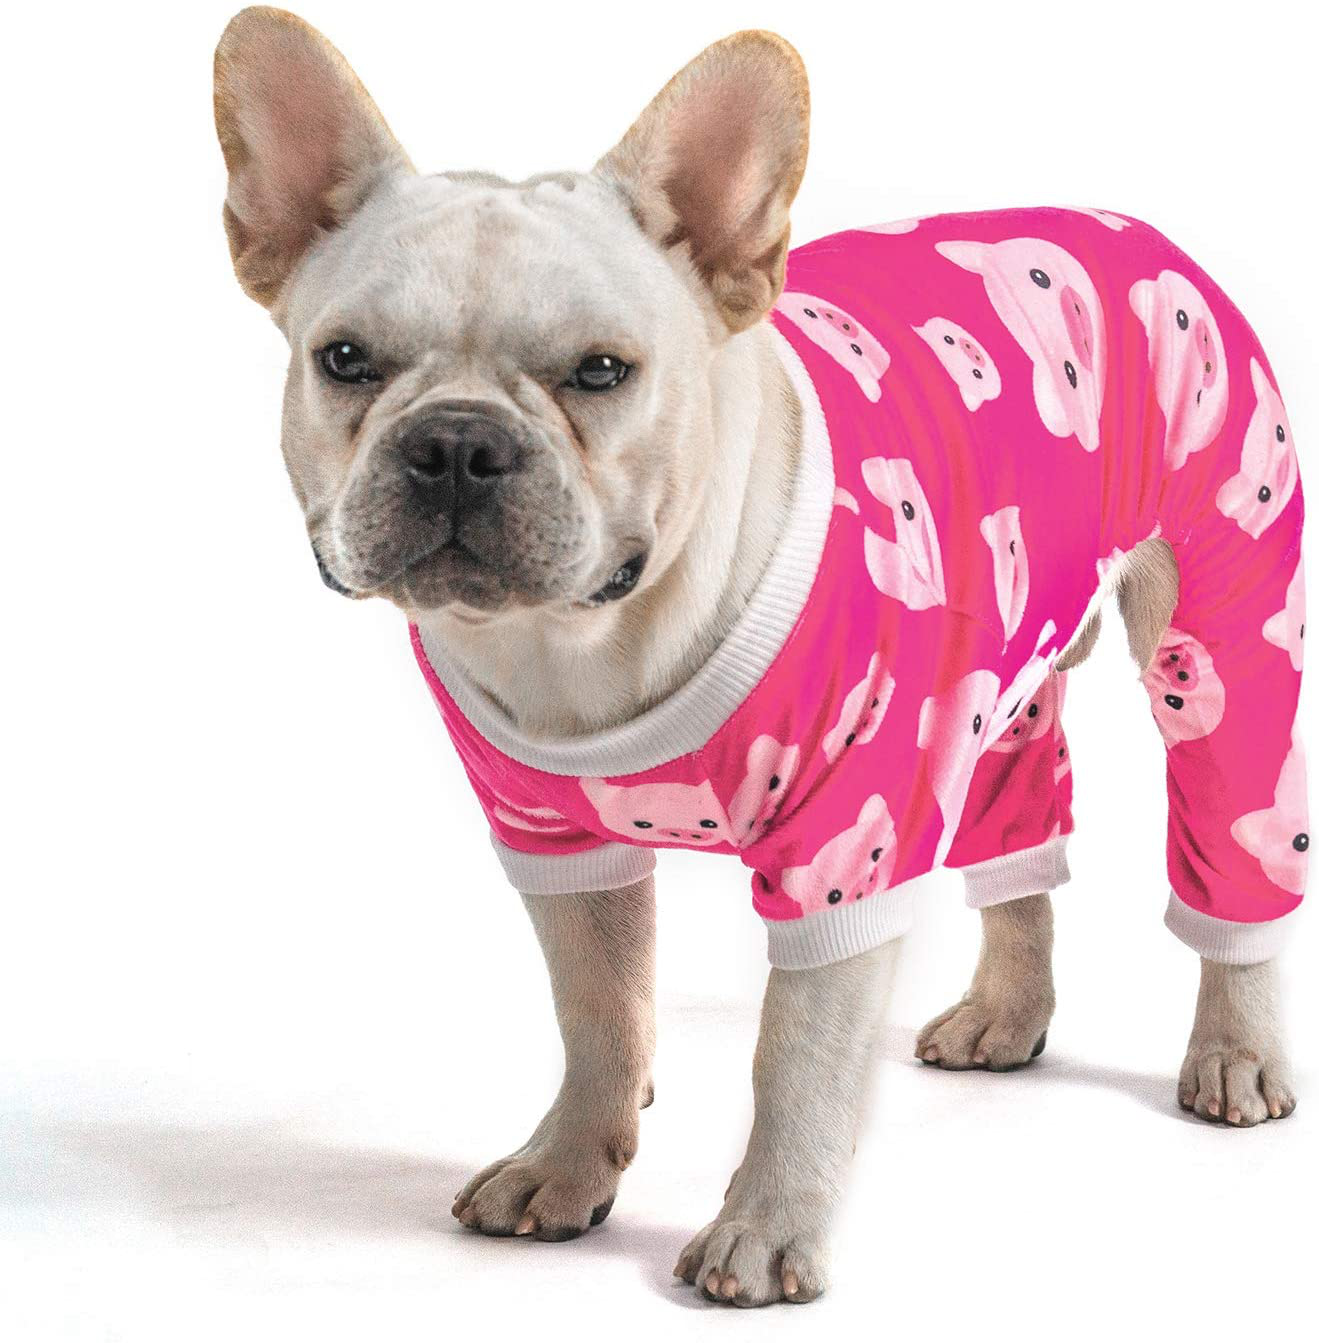 Cutebone Warm Dog Pajamas 2 Pack Cute Onesie for Medium Sized Dogs Boys&Girls Puppy Clothes